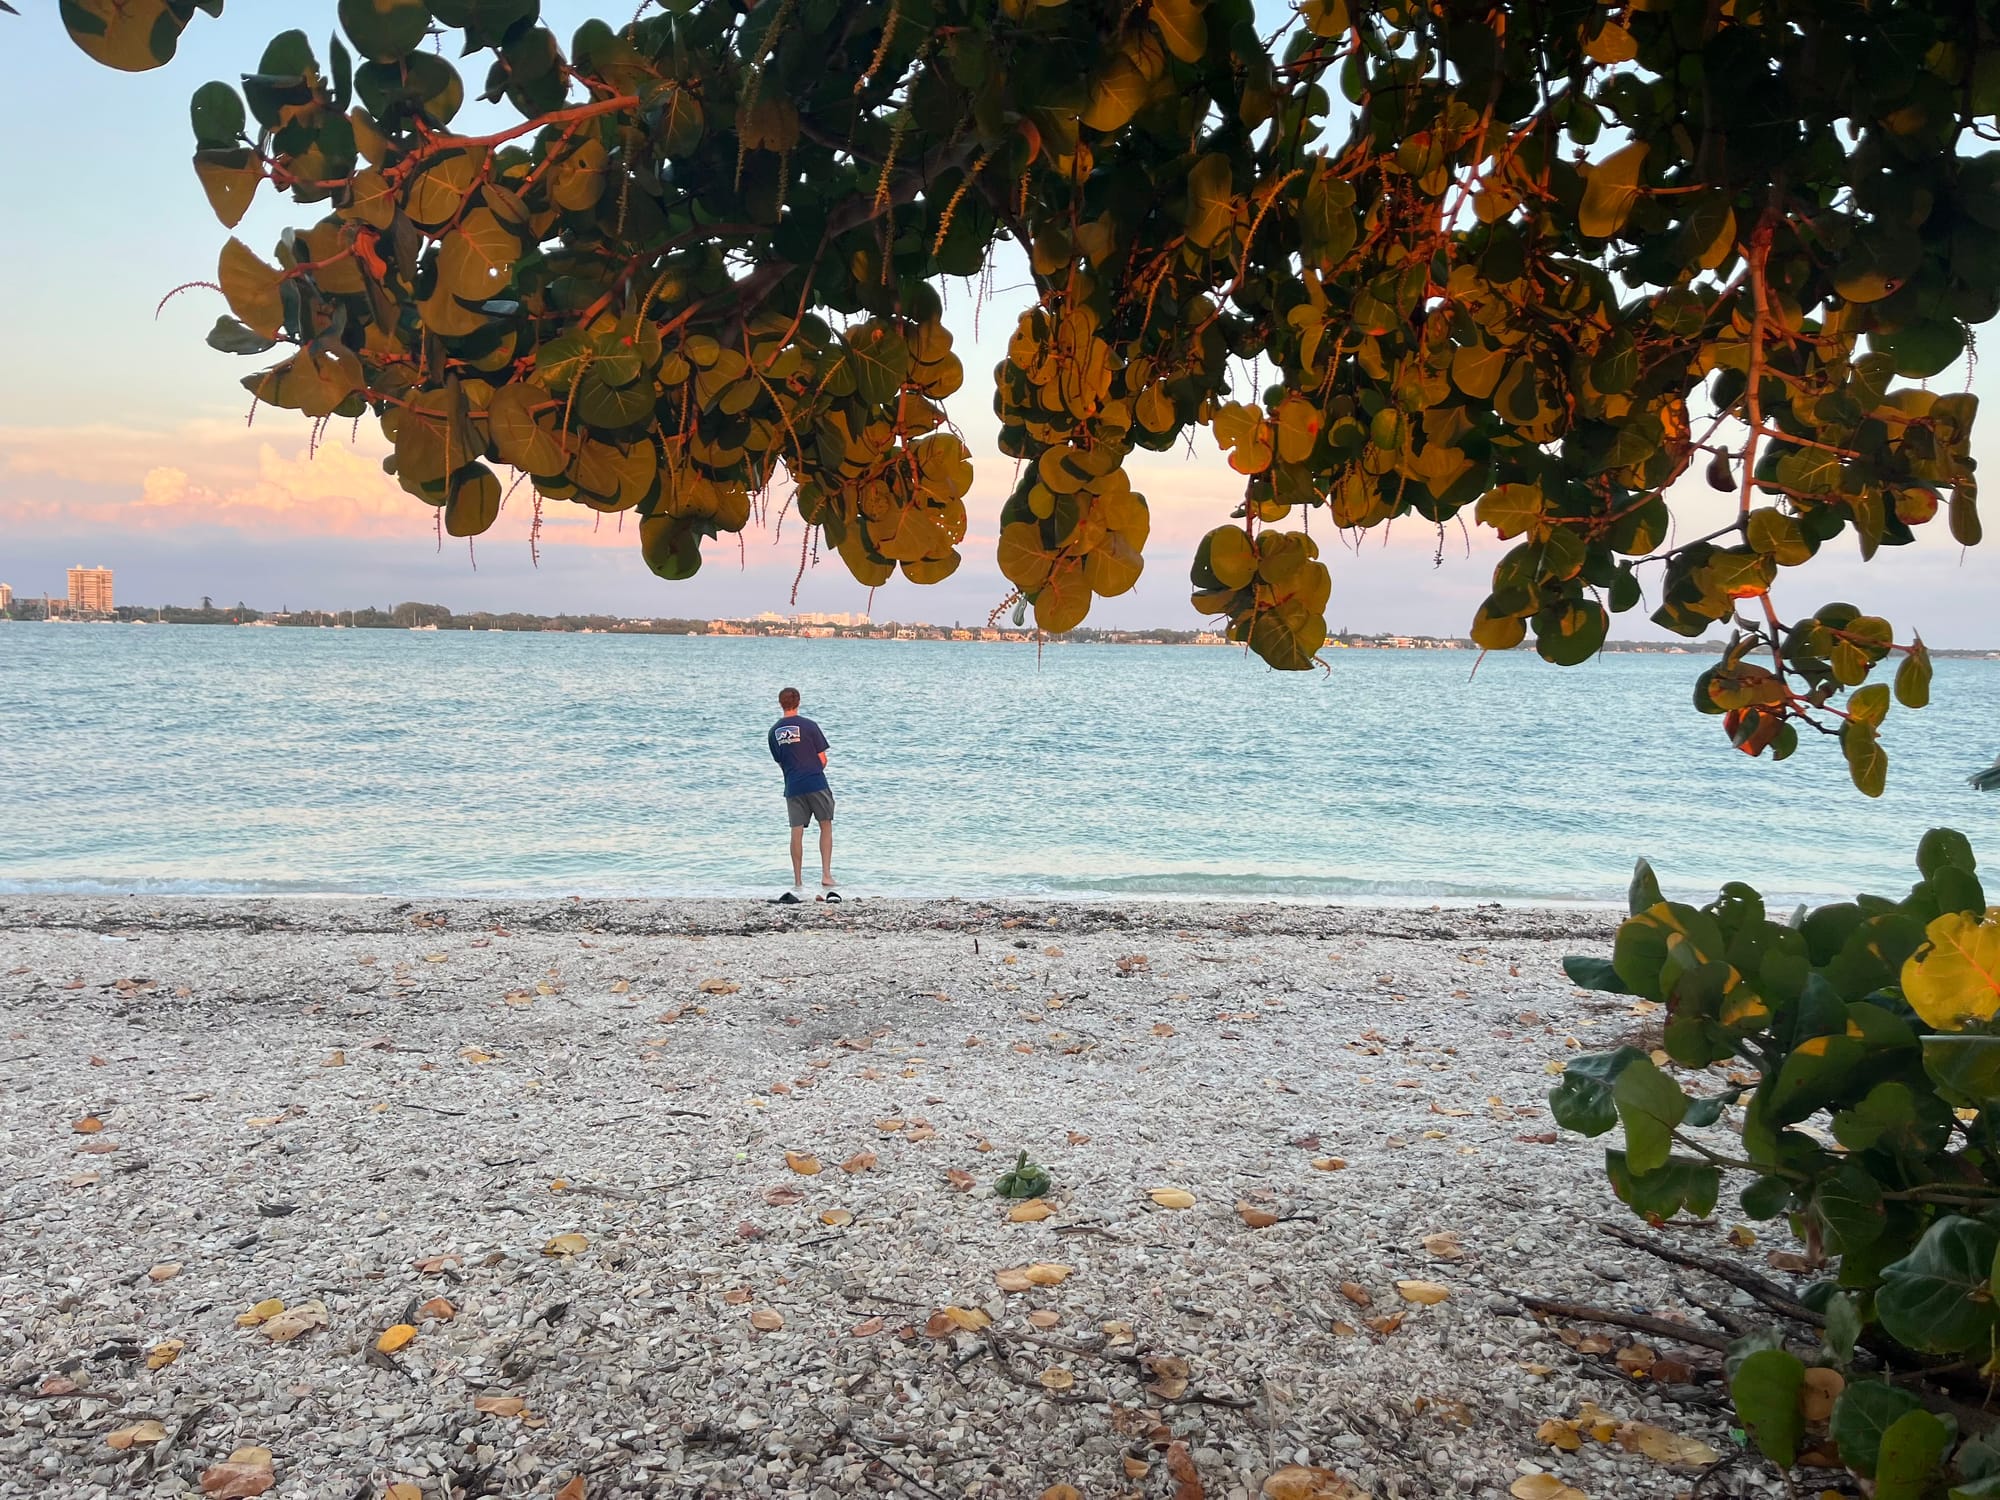 A man fishing on the beach in Lido Key, Florida